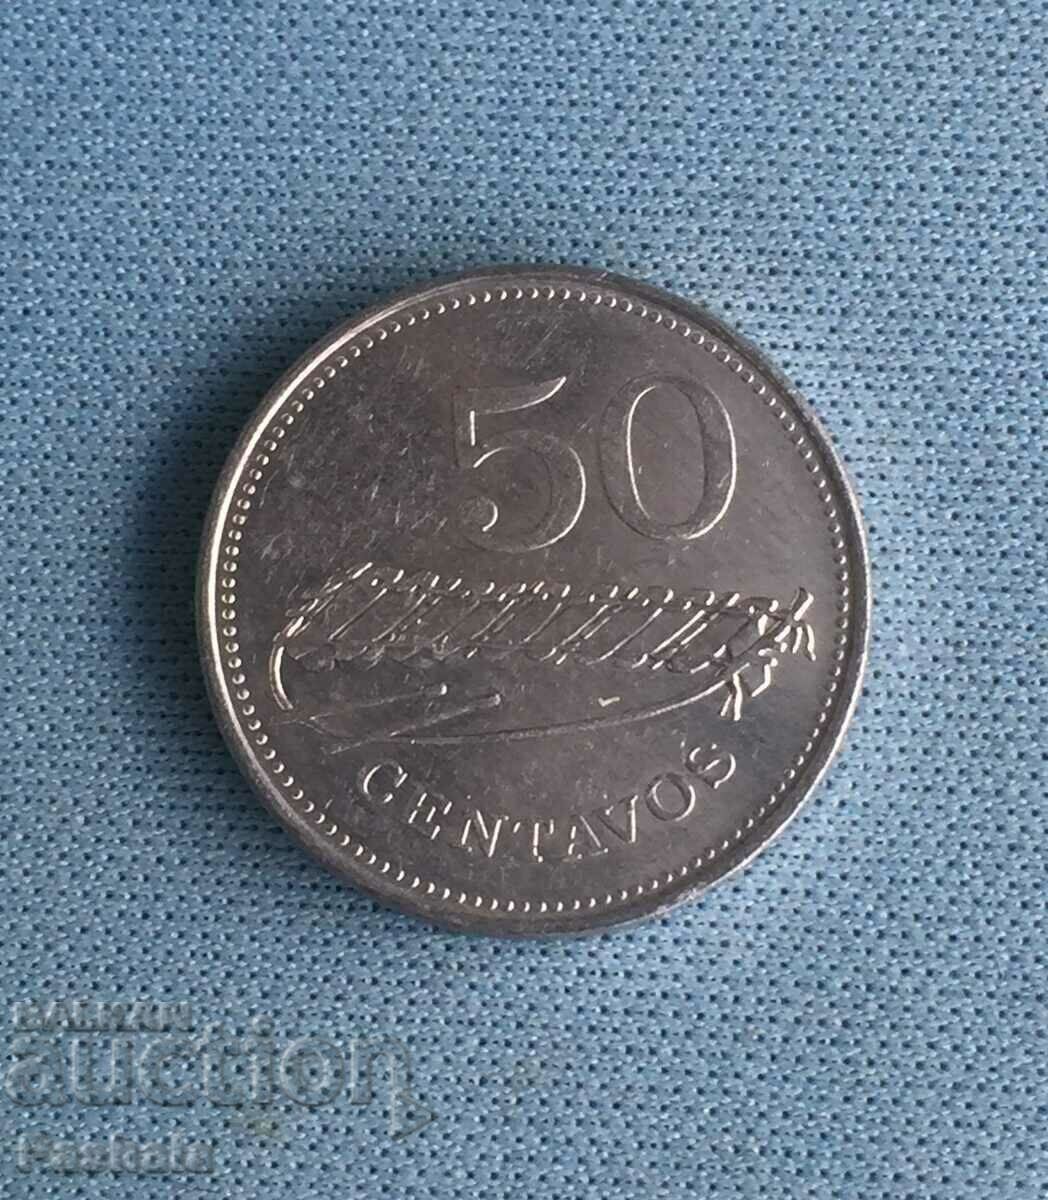 Mozambique 50 centavo 1980